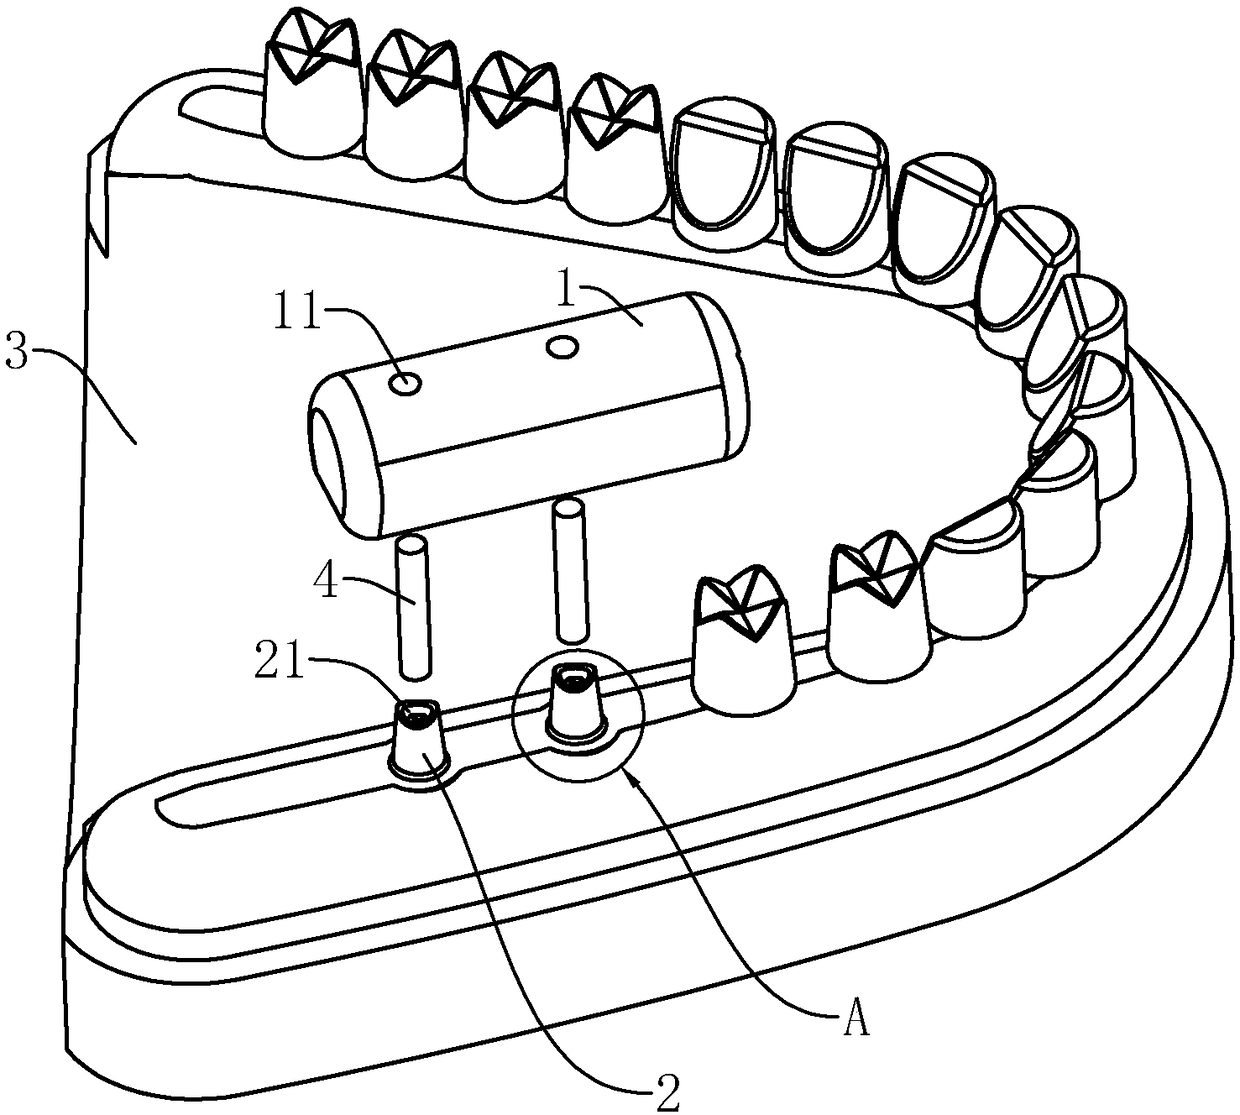 Dental implant implantation method